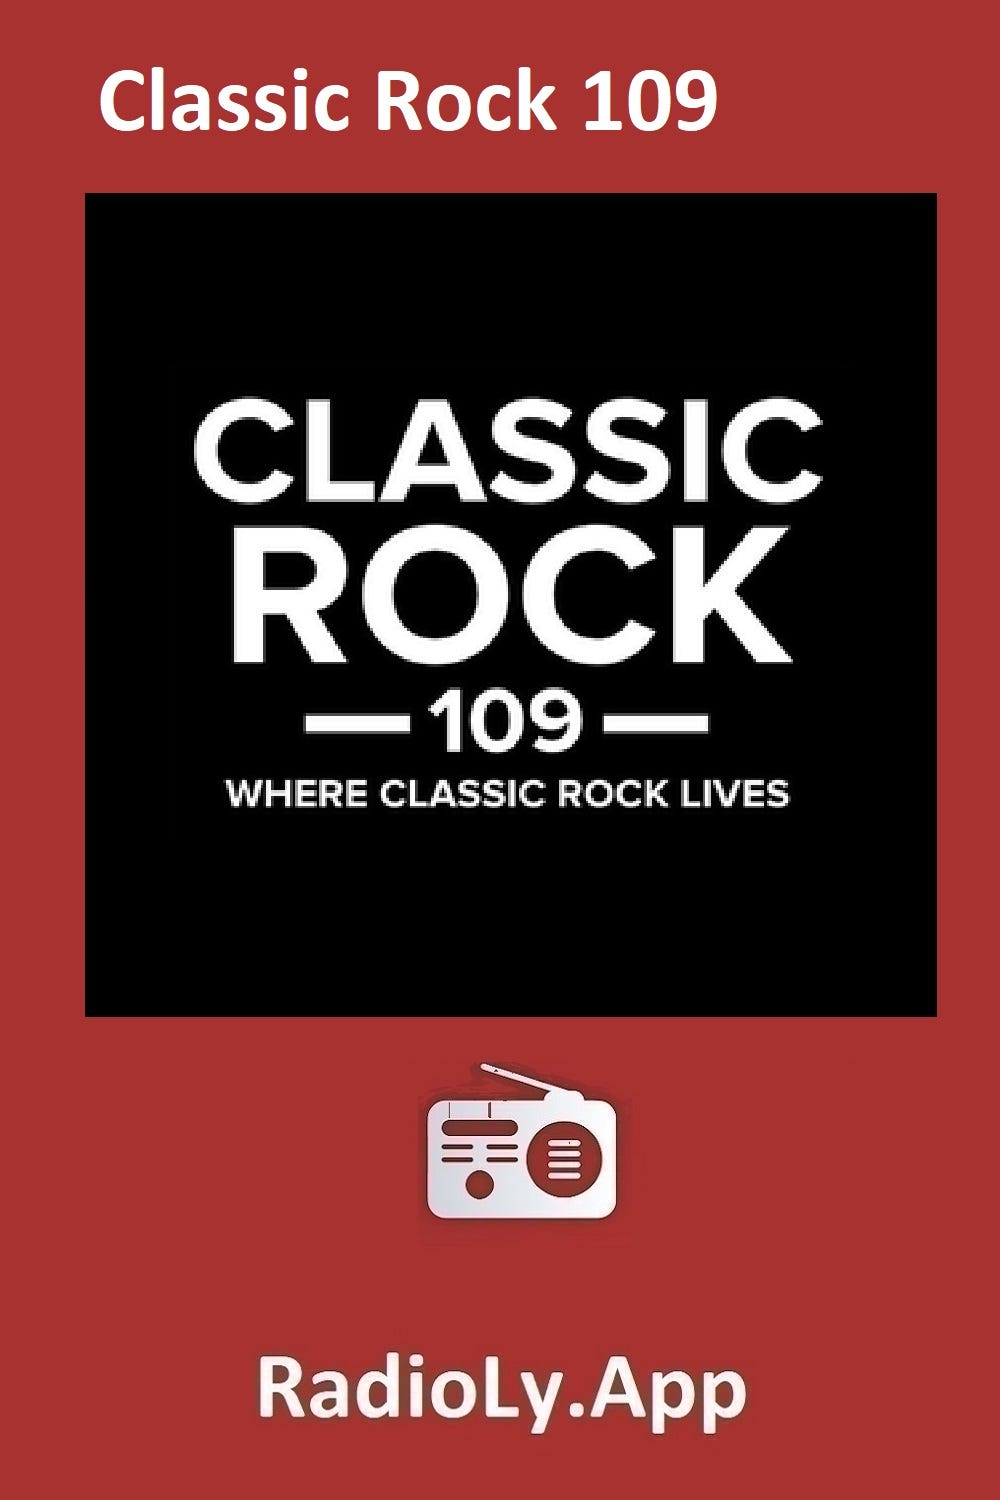 Classic Rock 109 — USA Internet Radio Station Online — RadiolyApp - Radioly  - Medium